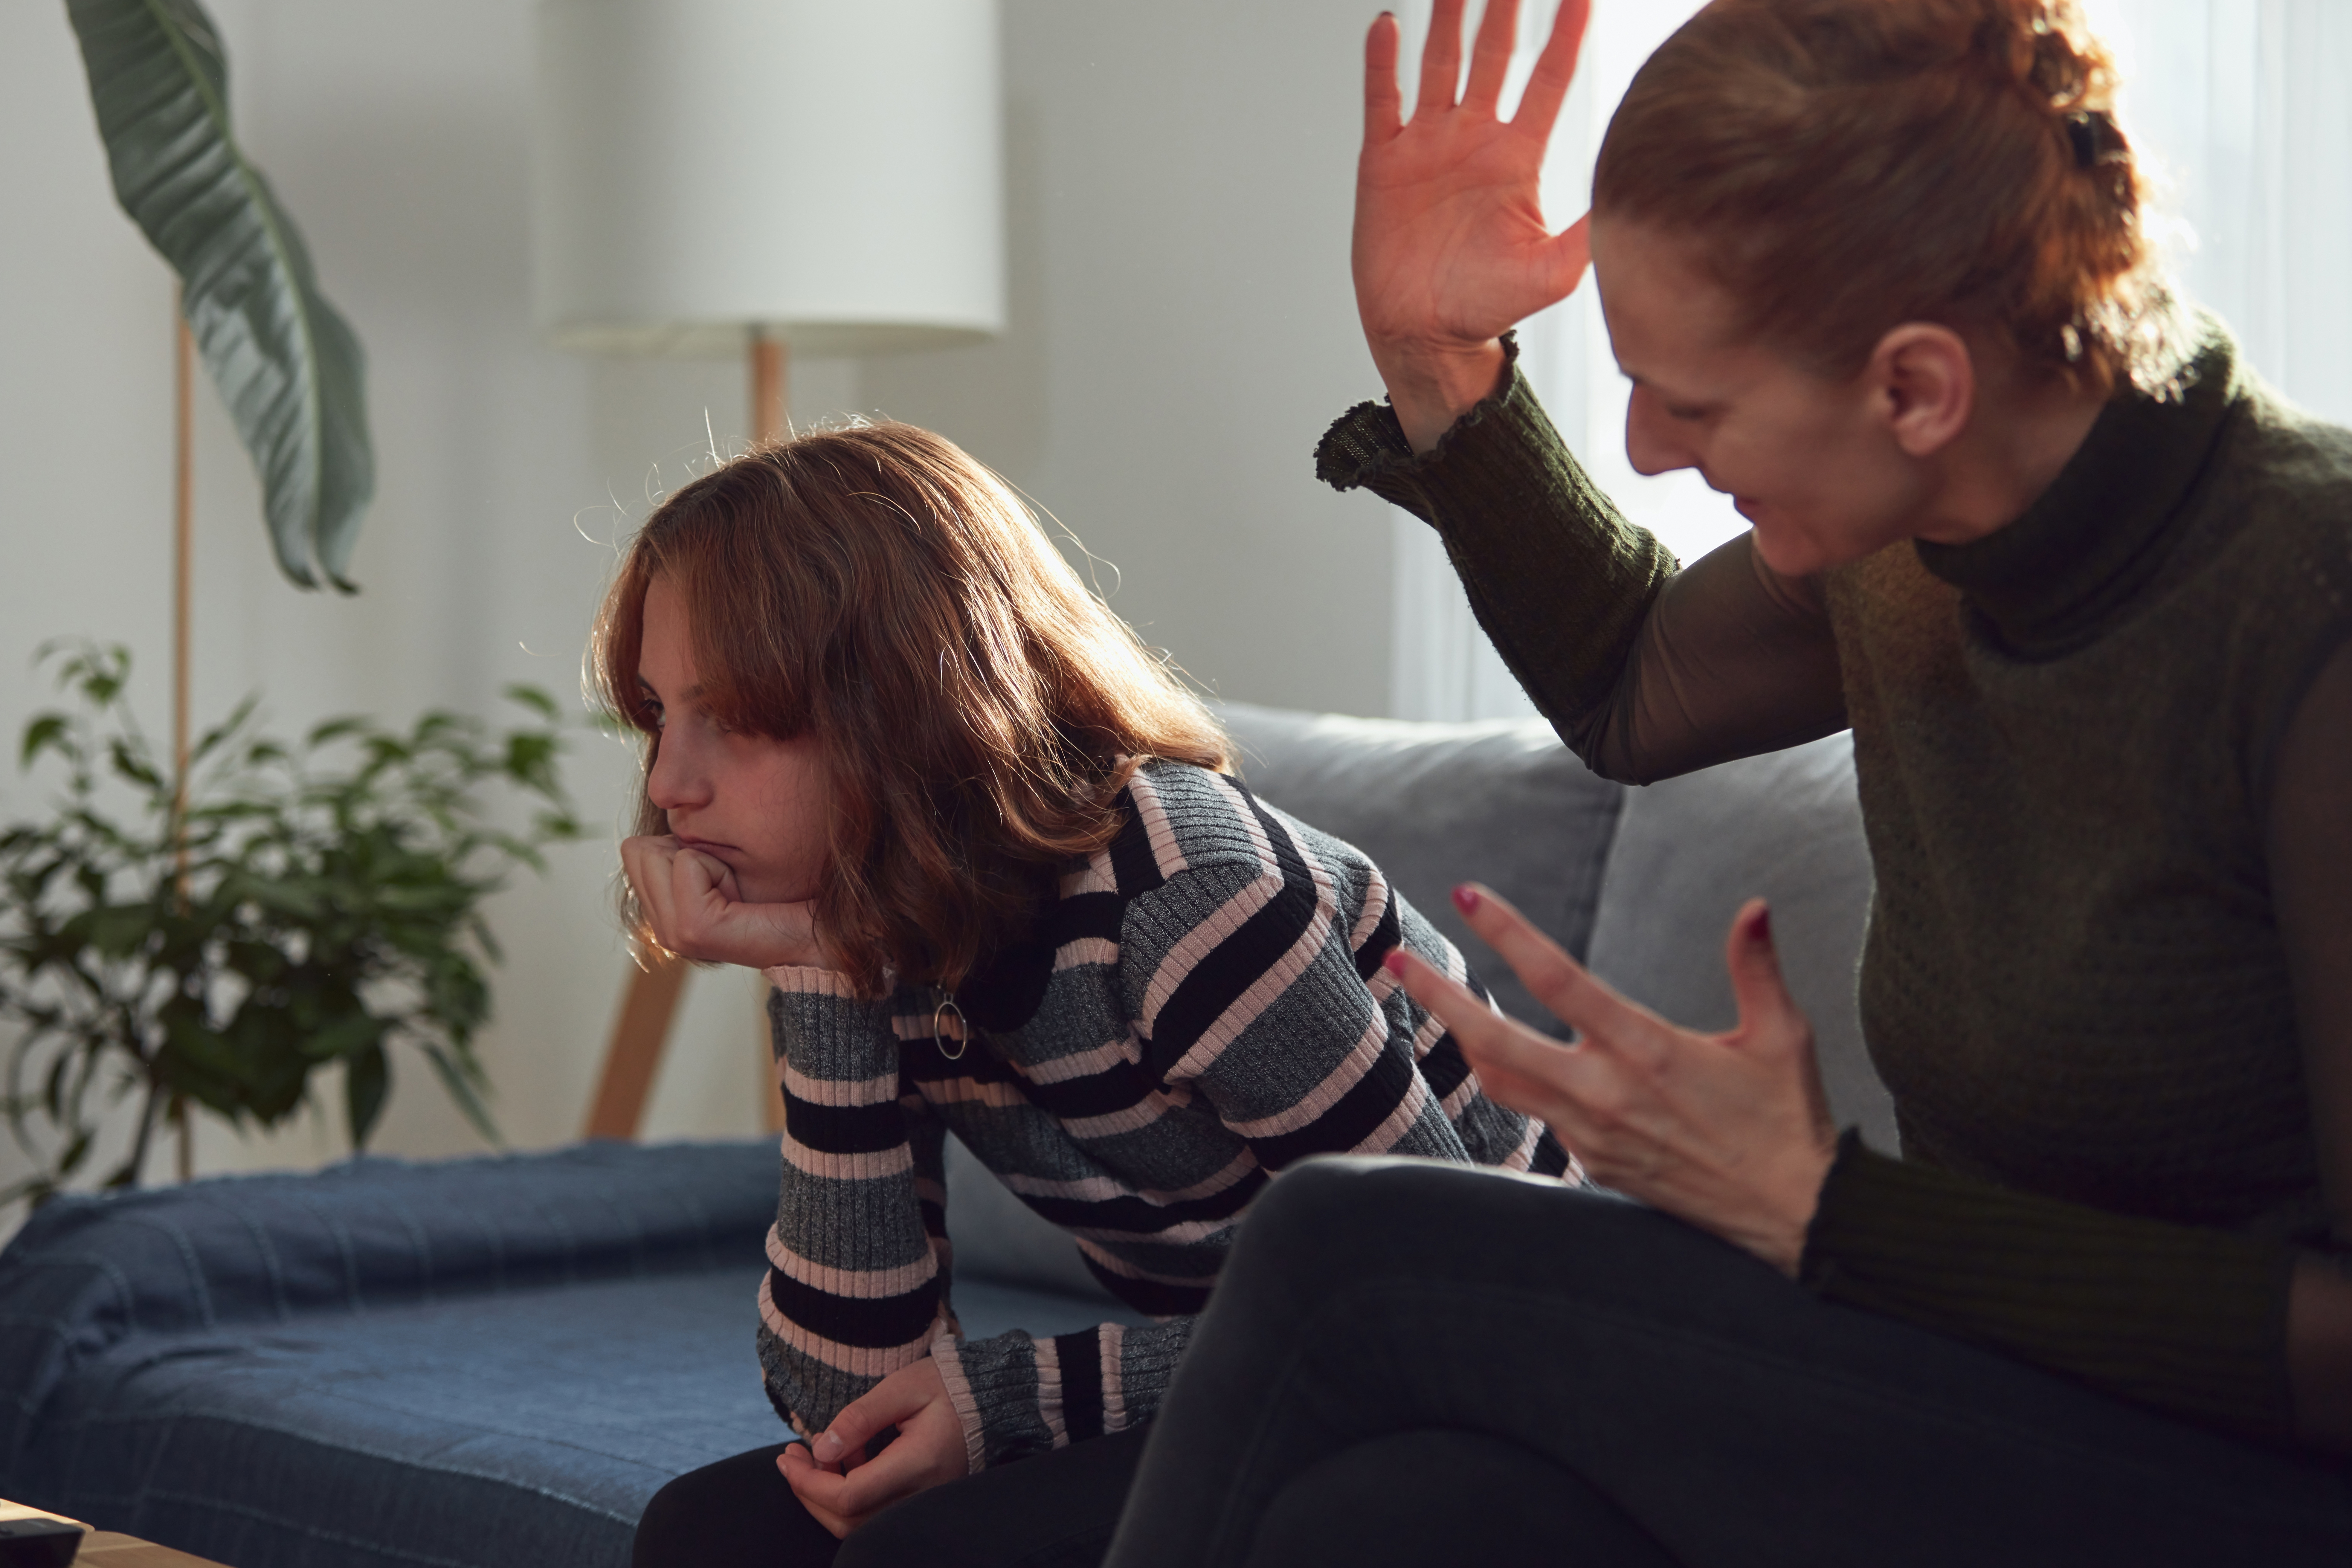 A woman scolding a child | Source: Shutterstock